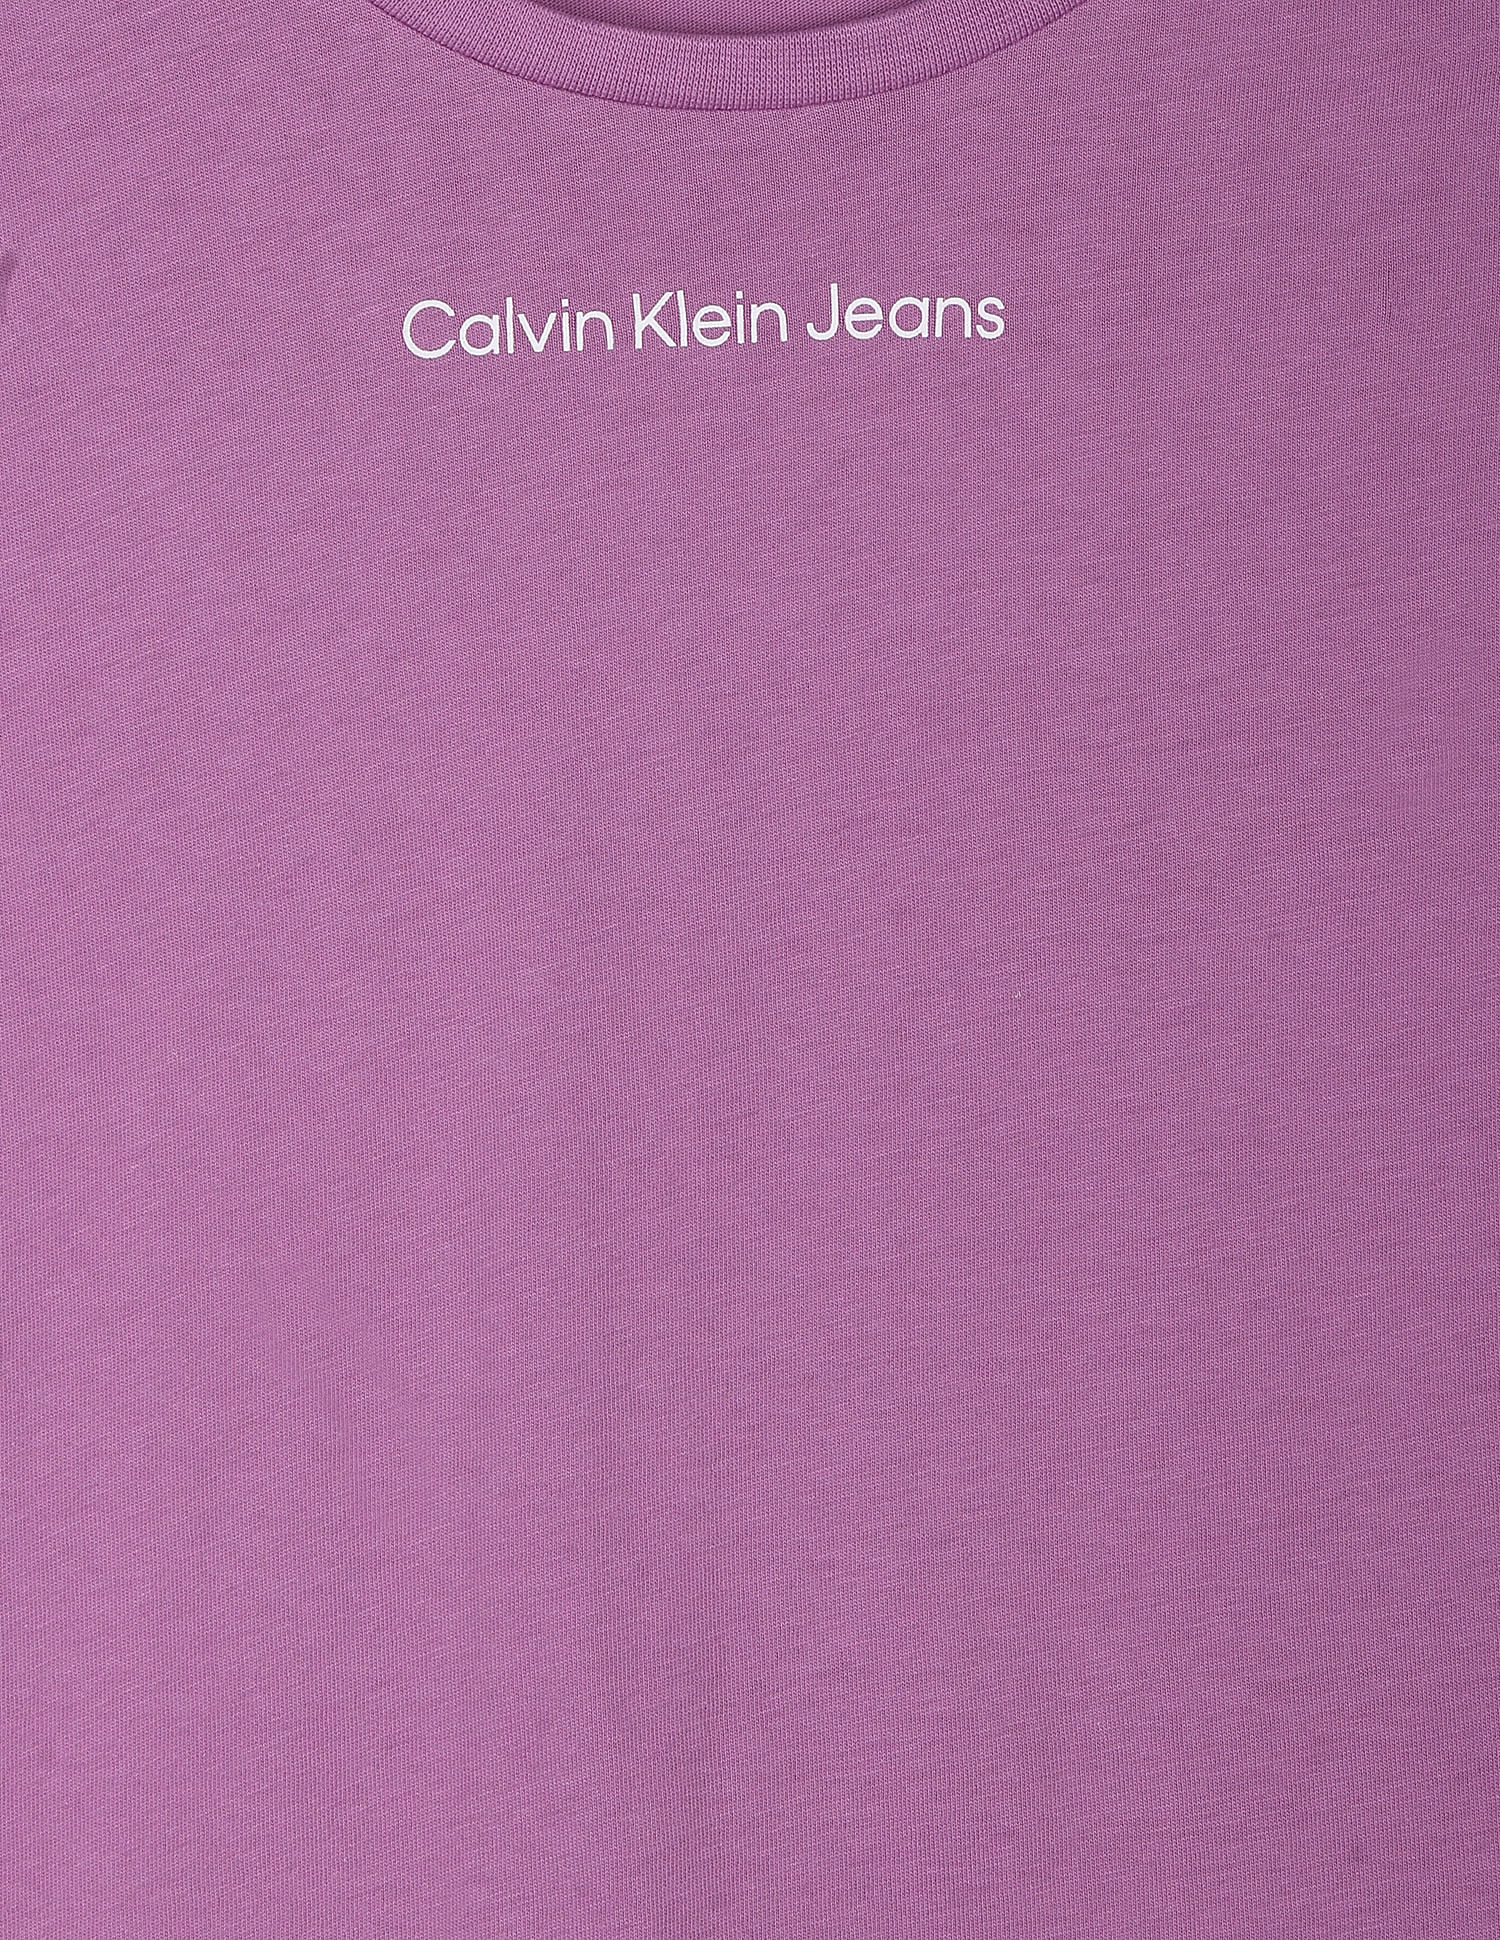 Monogram Buy Transitional Micro T-Shirt Jeans Calvin Cotton Klein